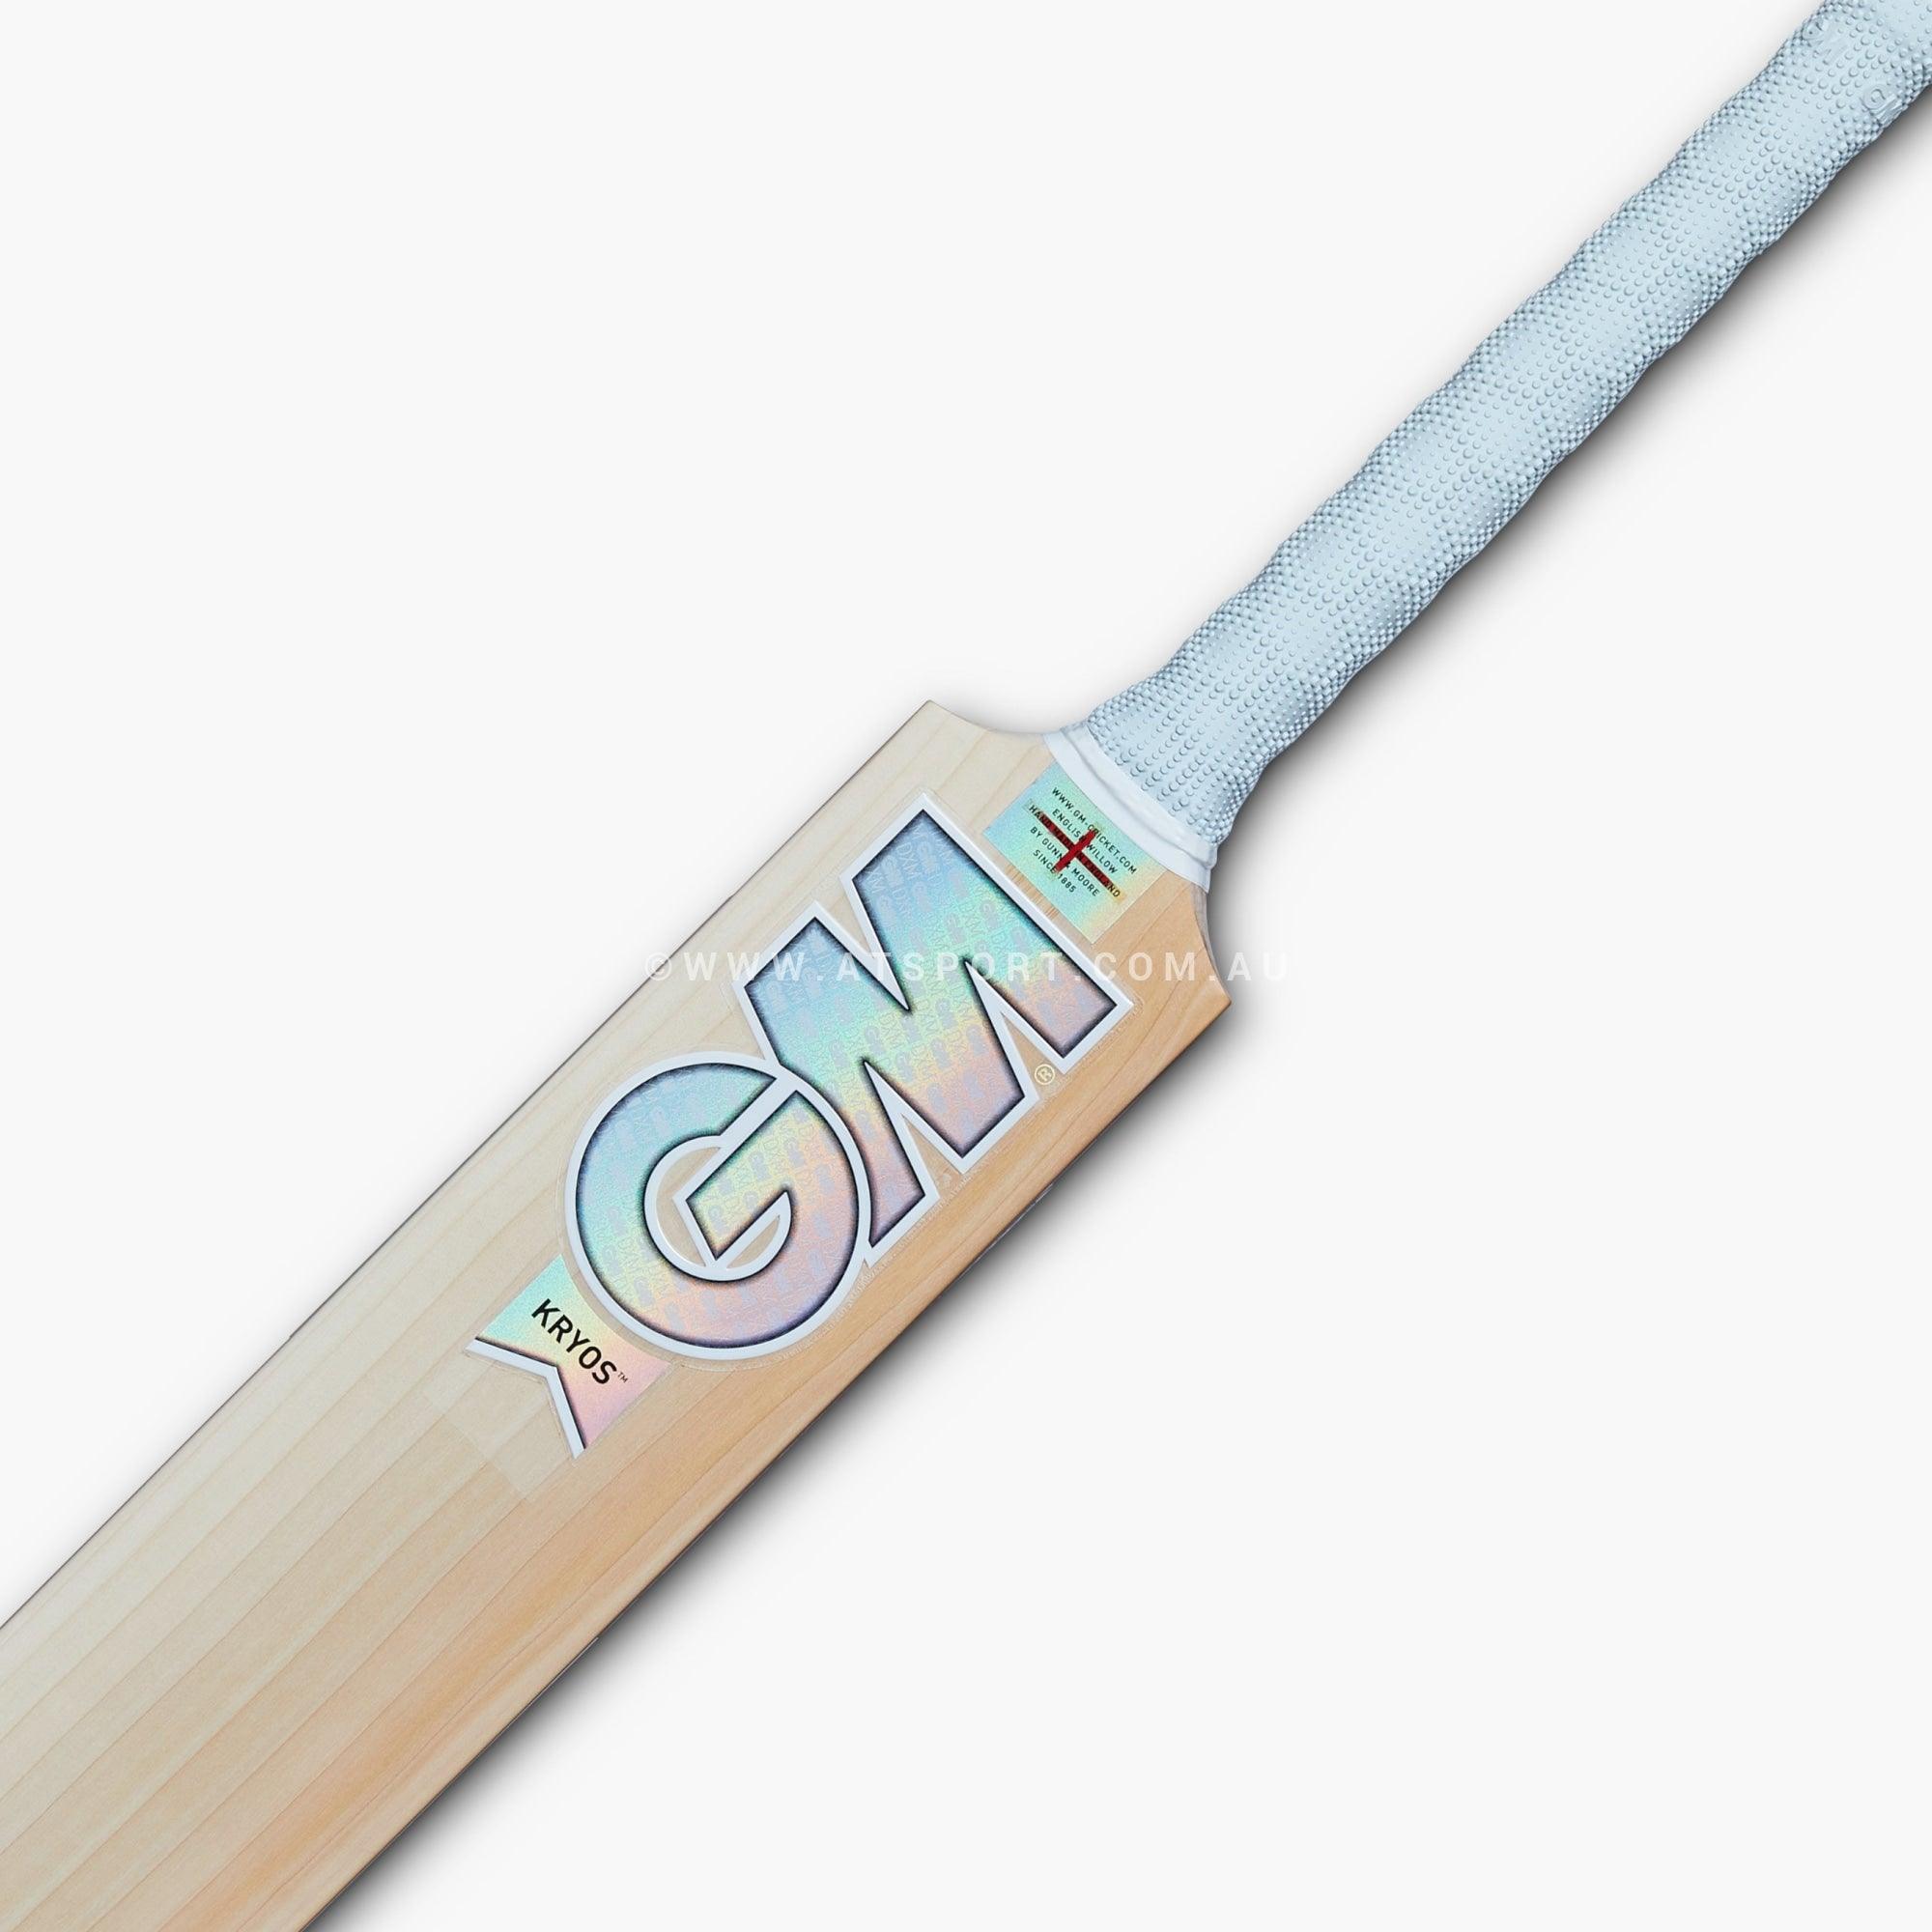 Gm Kryos 404 Dxm Ttnow L555 English Willow Cricket Bat - H Grade 3